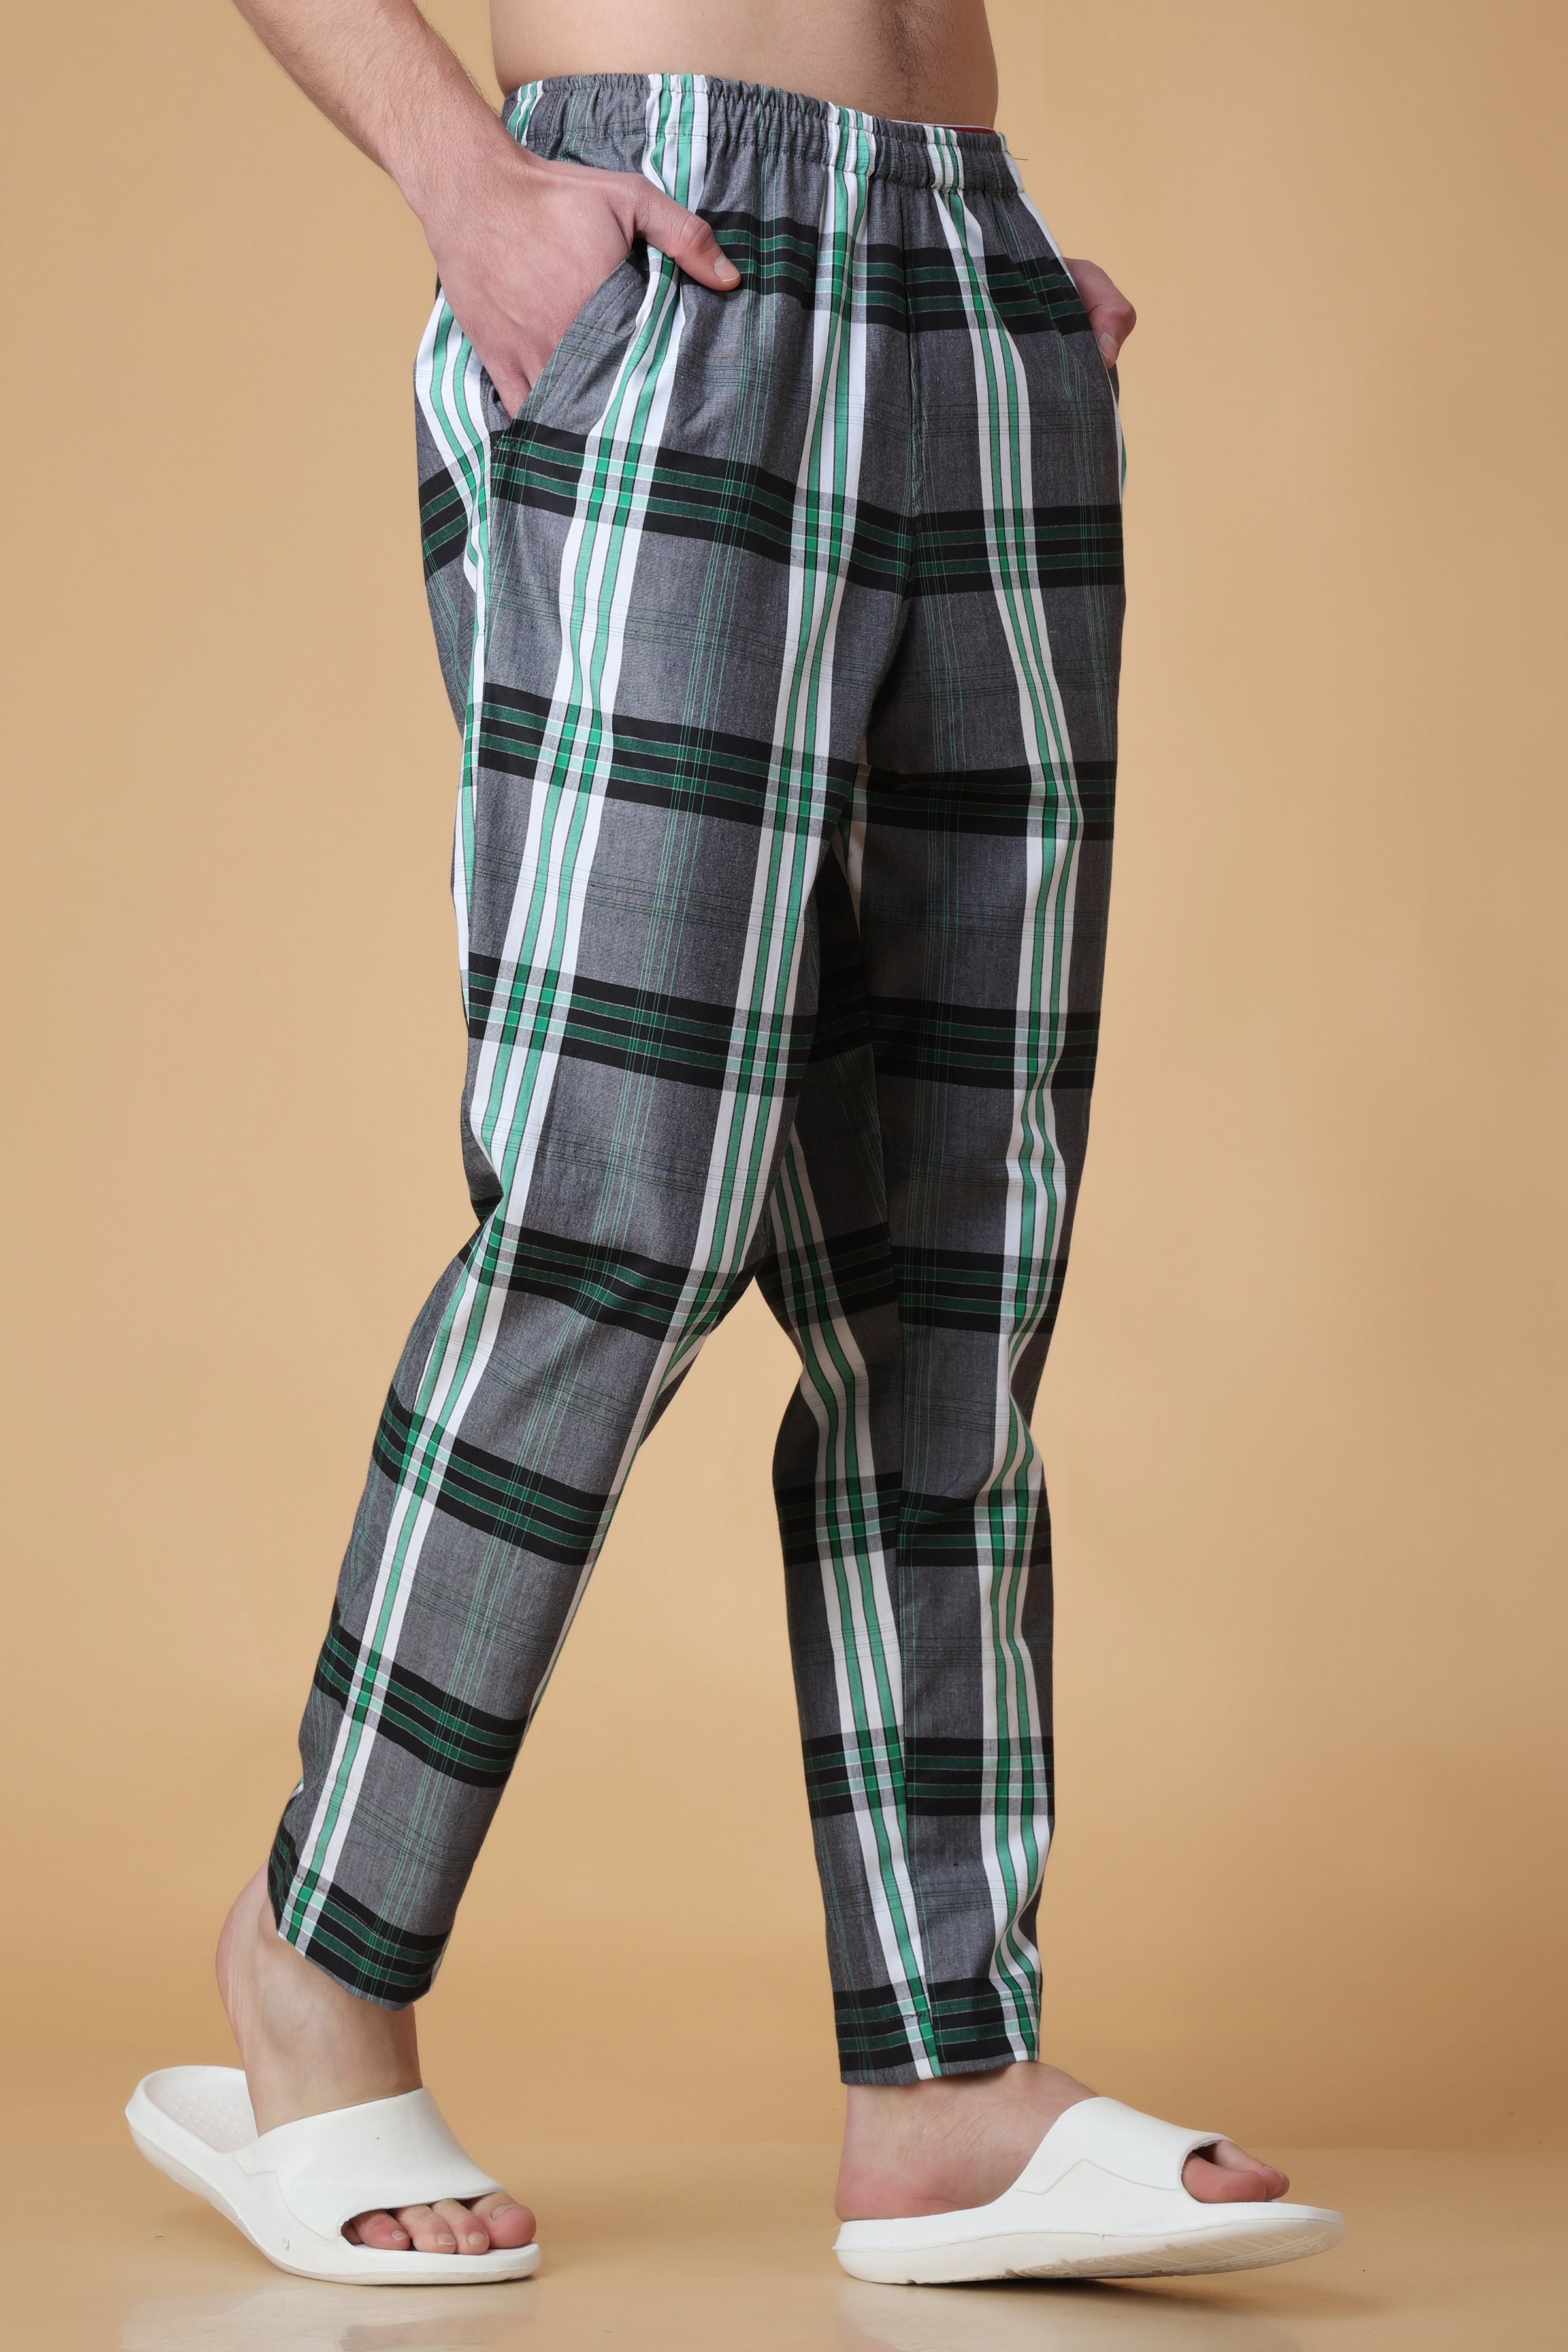 EASY 2 WEAR  Men checks Cotton Comfort fit Pyjama Pants s To 4xl Lounge  Pants